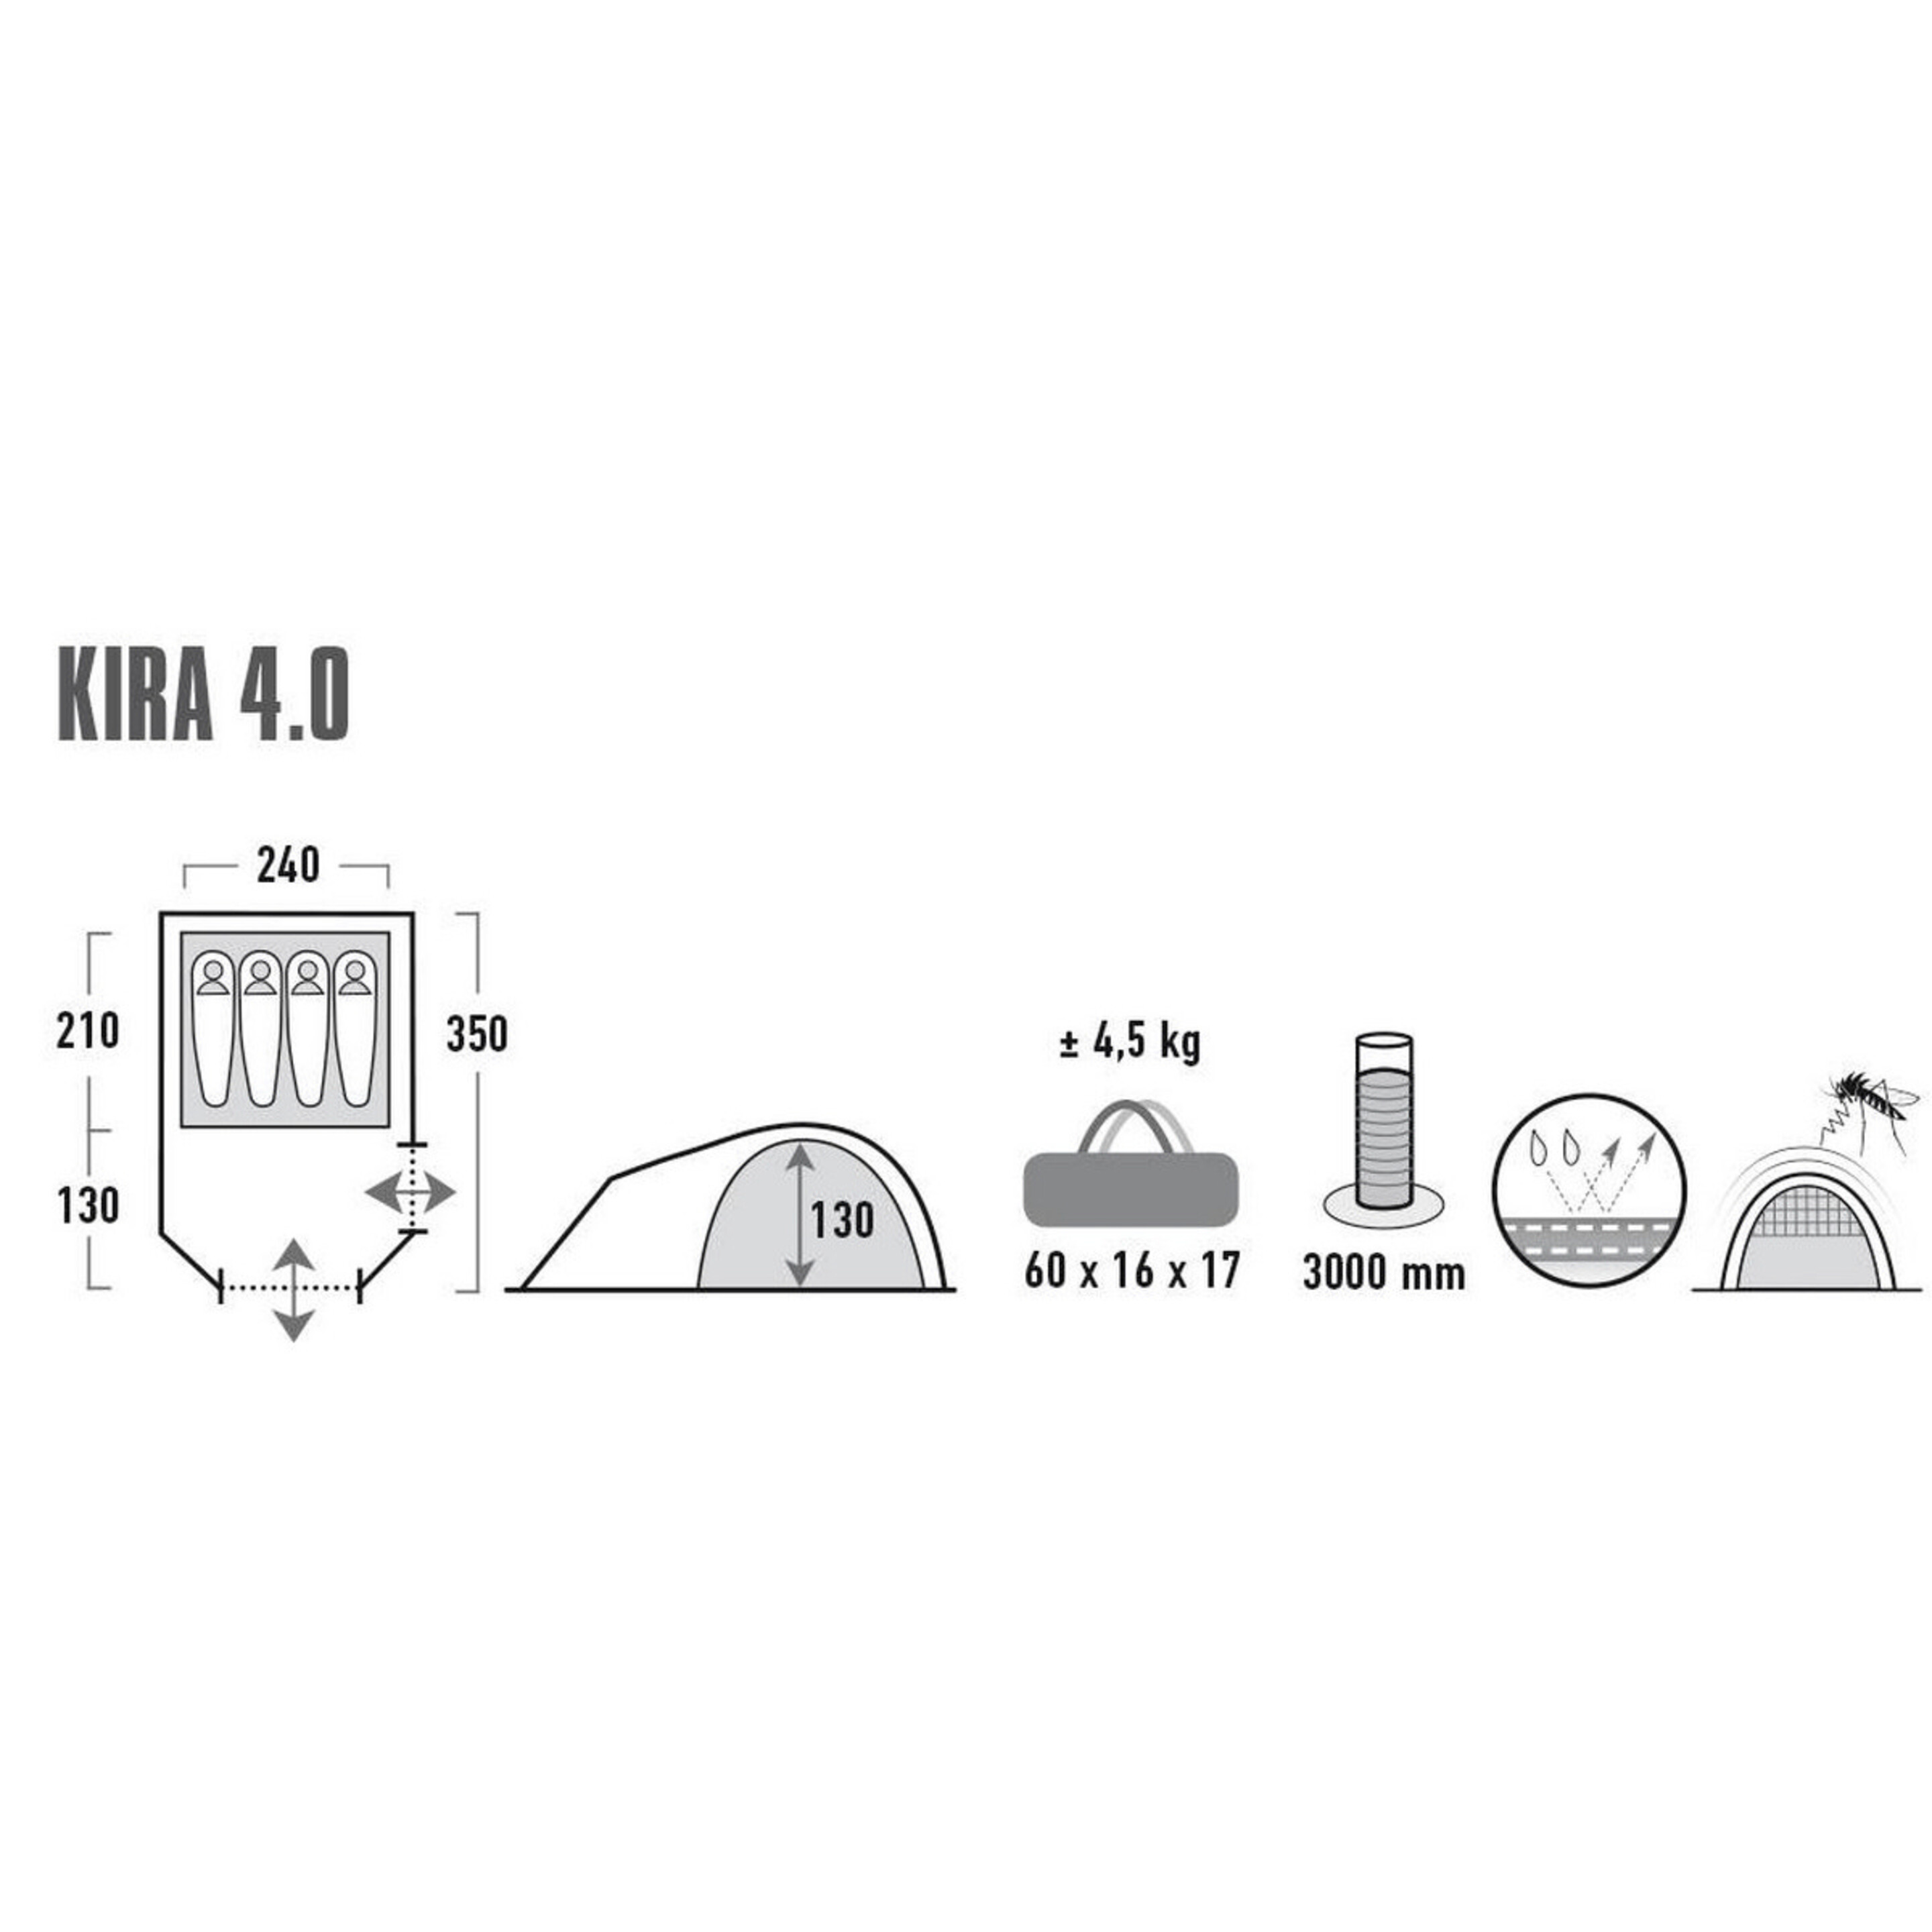 Tenda De Campismo Kira 4.0 High Peak - Cinzento | Sport Zone MKP